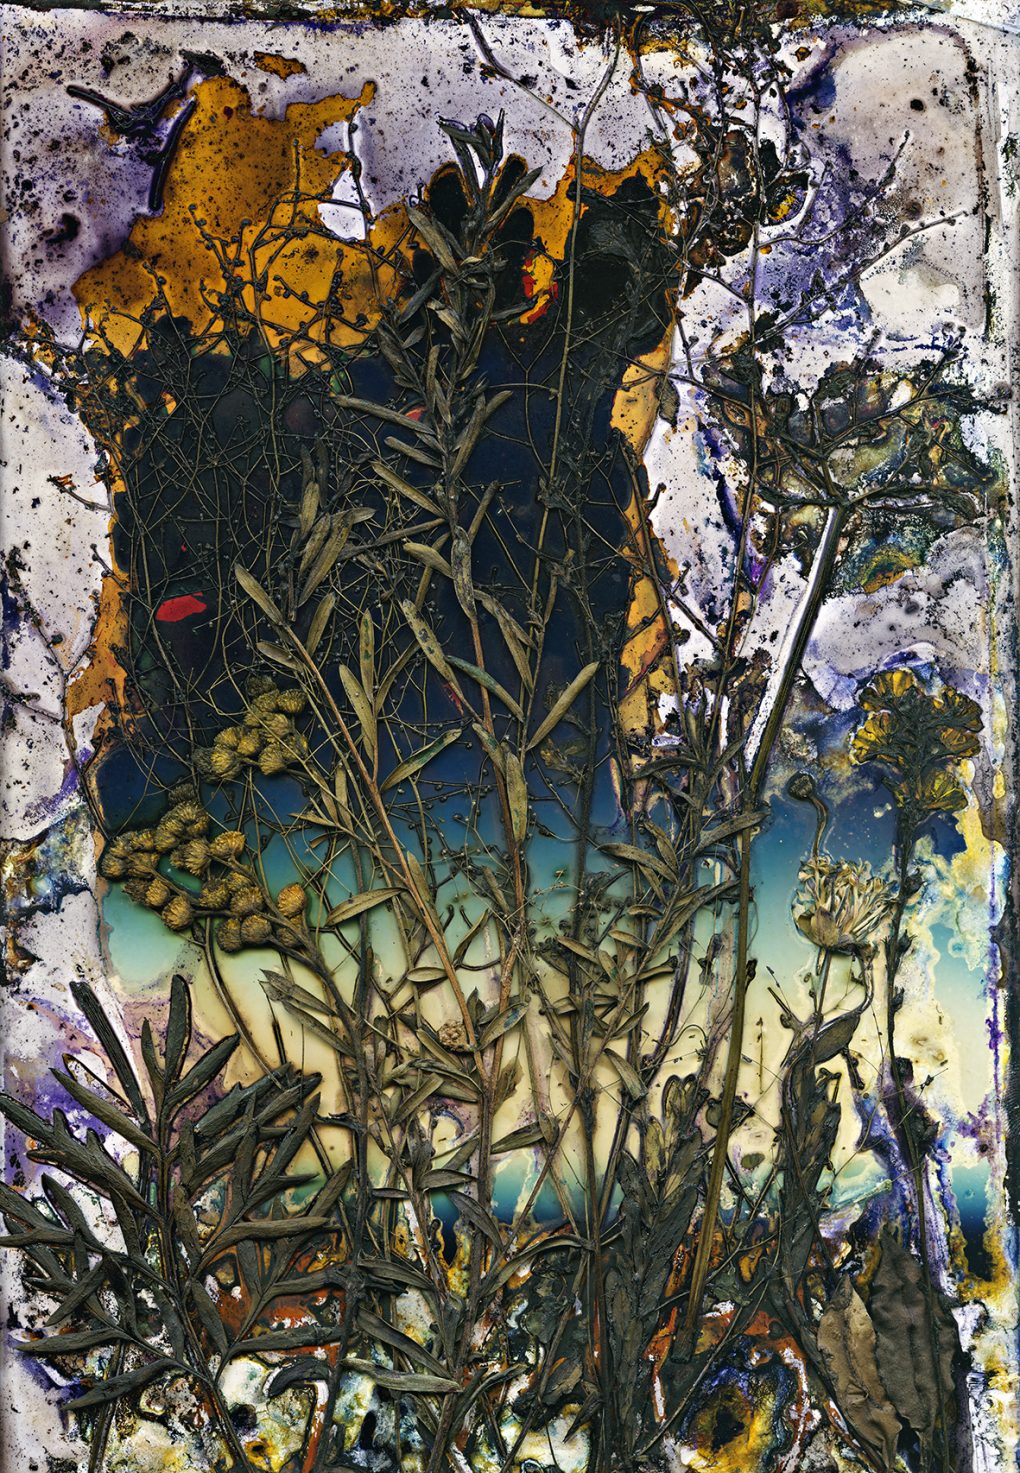 Exhibition: Wildflowers of the Granite Belt: Out of Oblivion – Renata Buziak